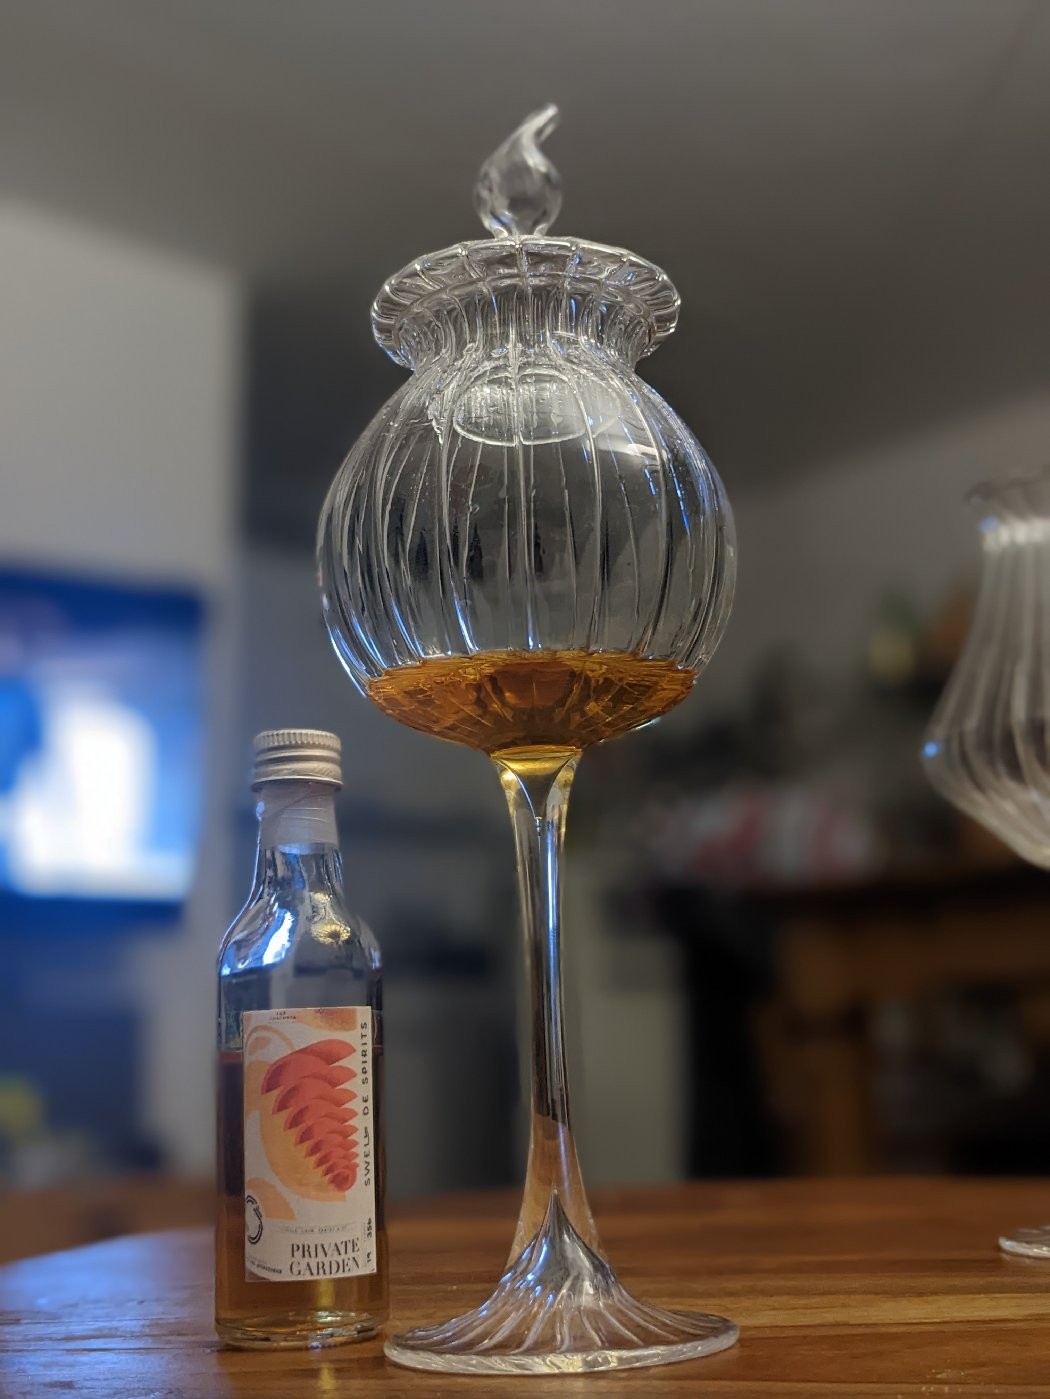 Photo of the bottle taken from user crazyforgoodbooze